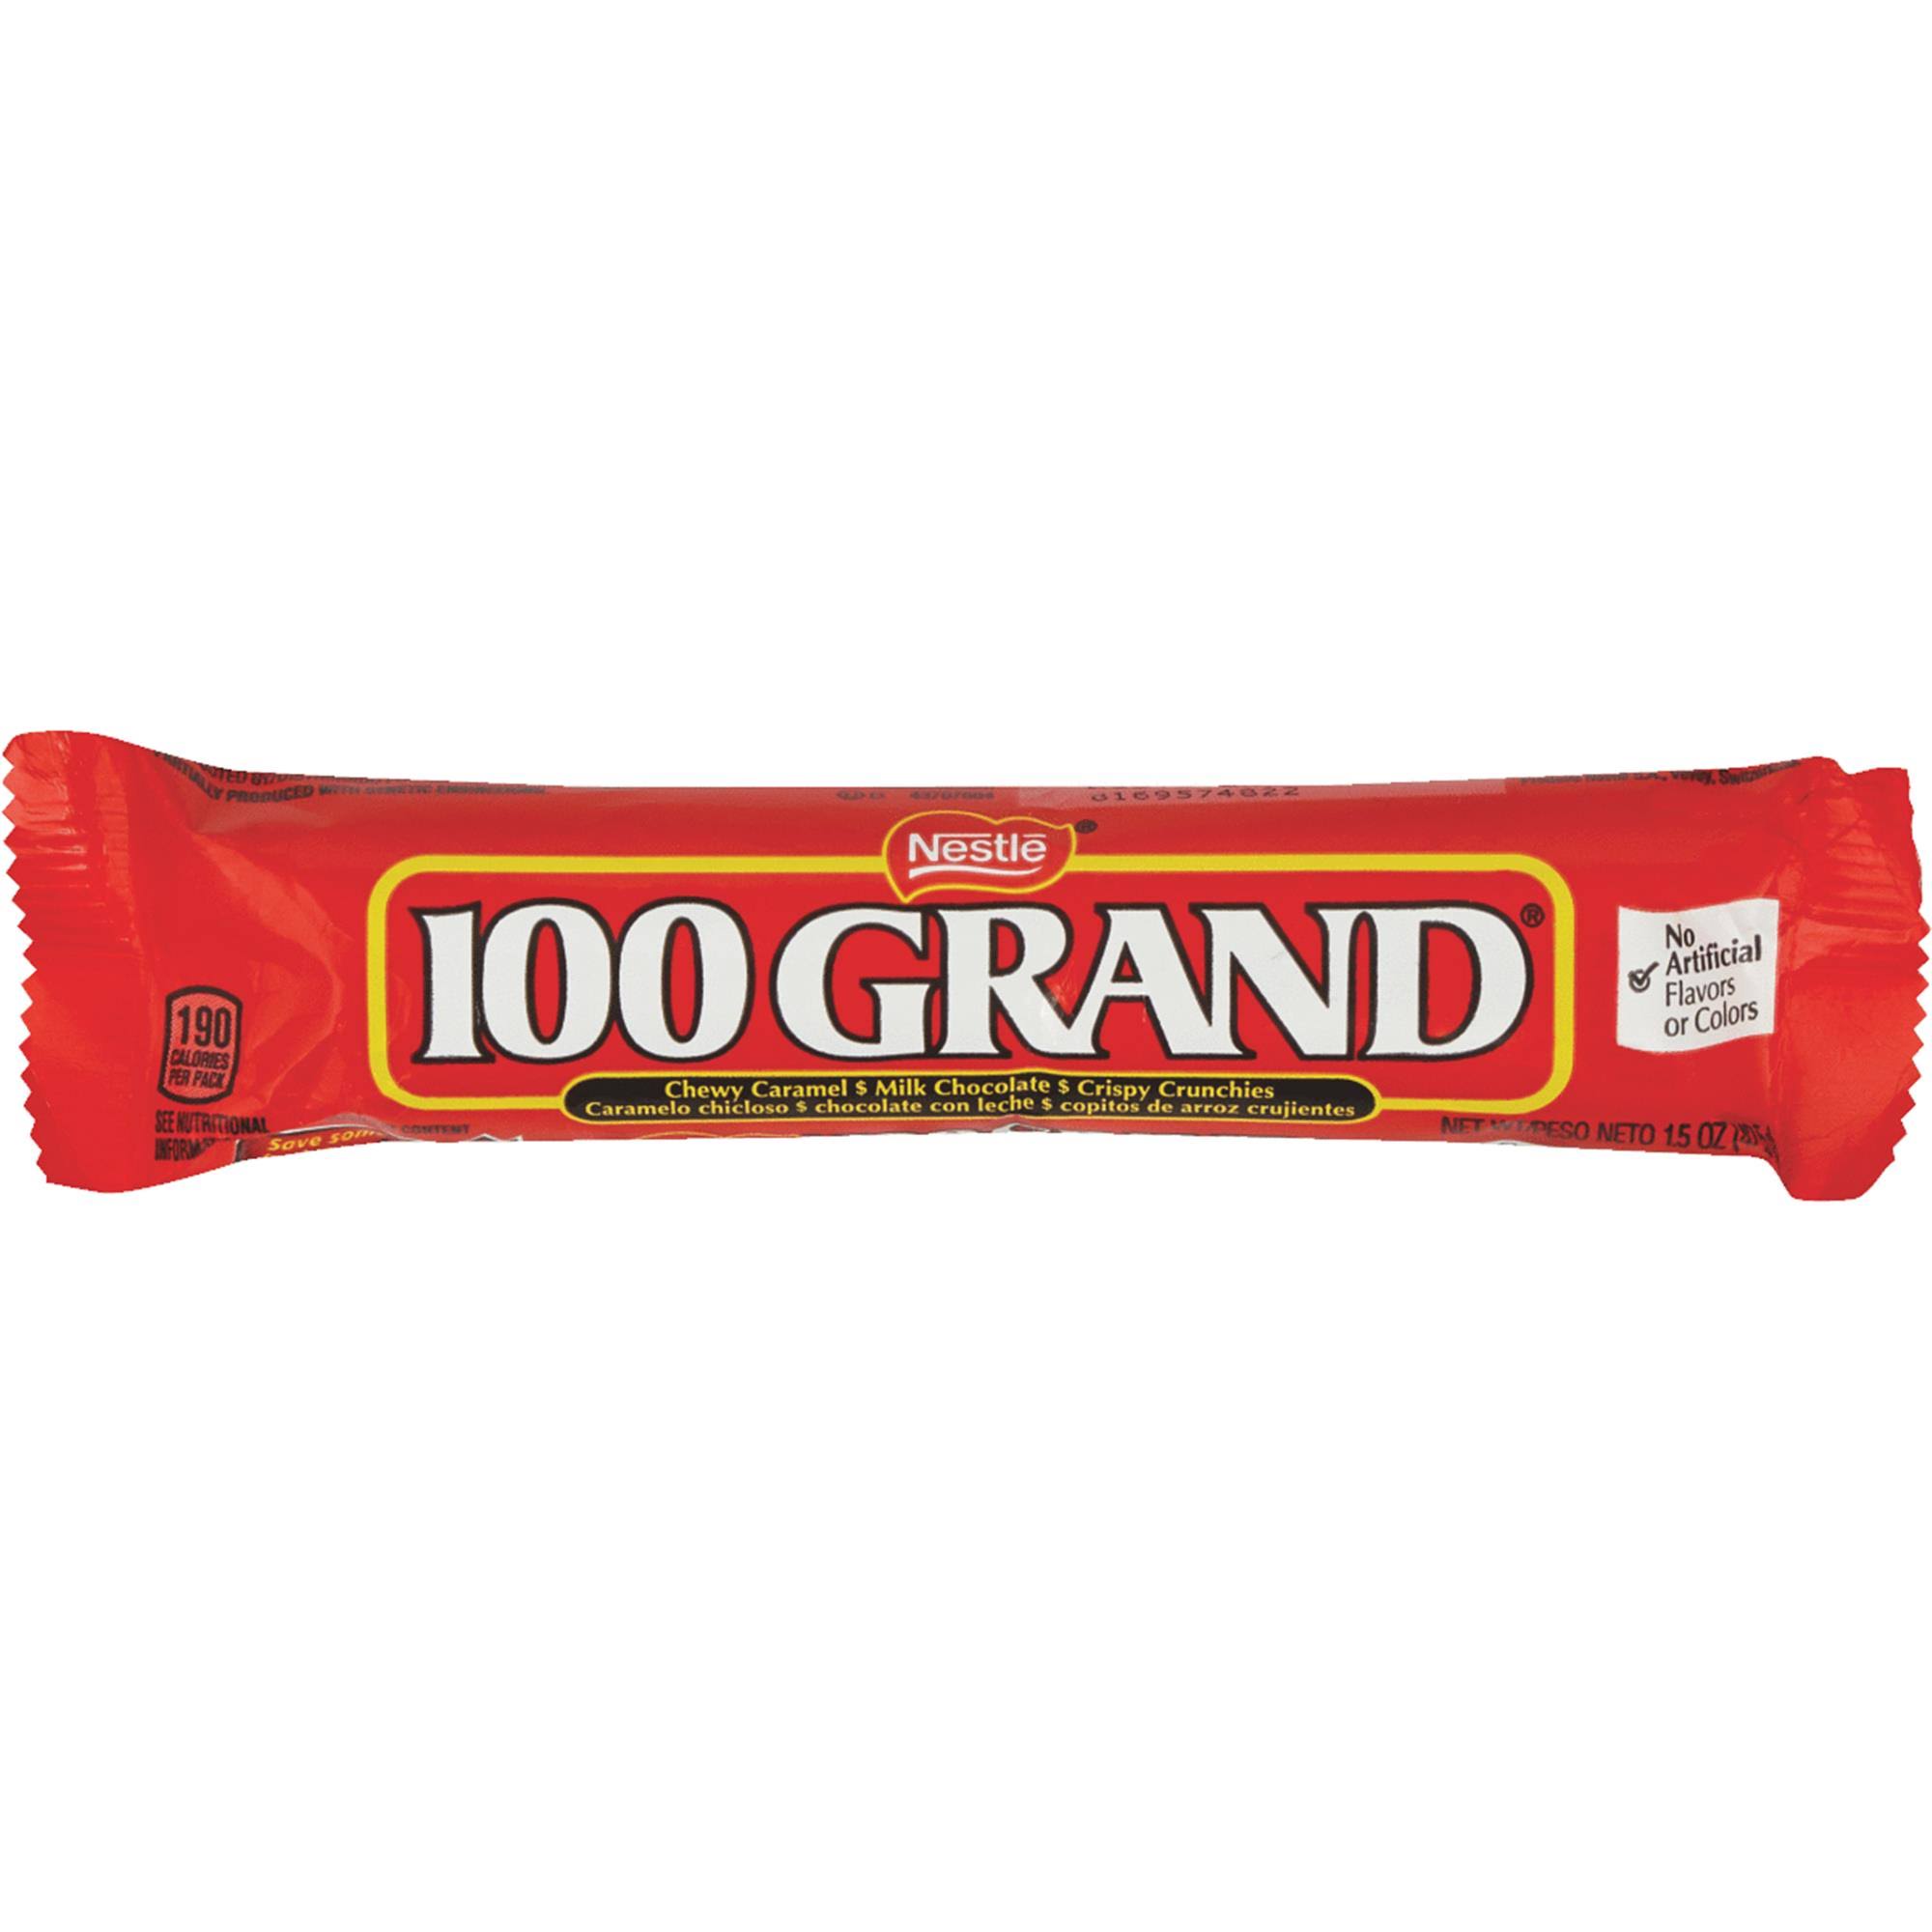 100 Grand Candy Bar - 1.5oz, 36ct